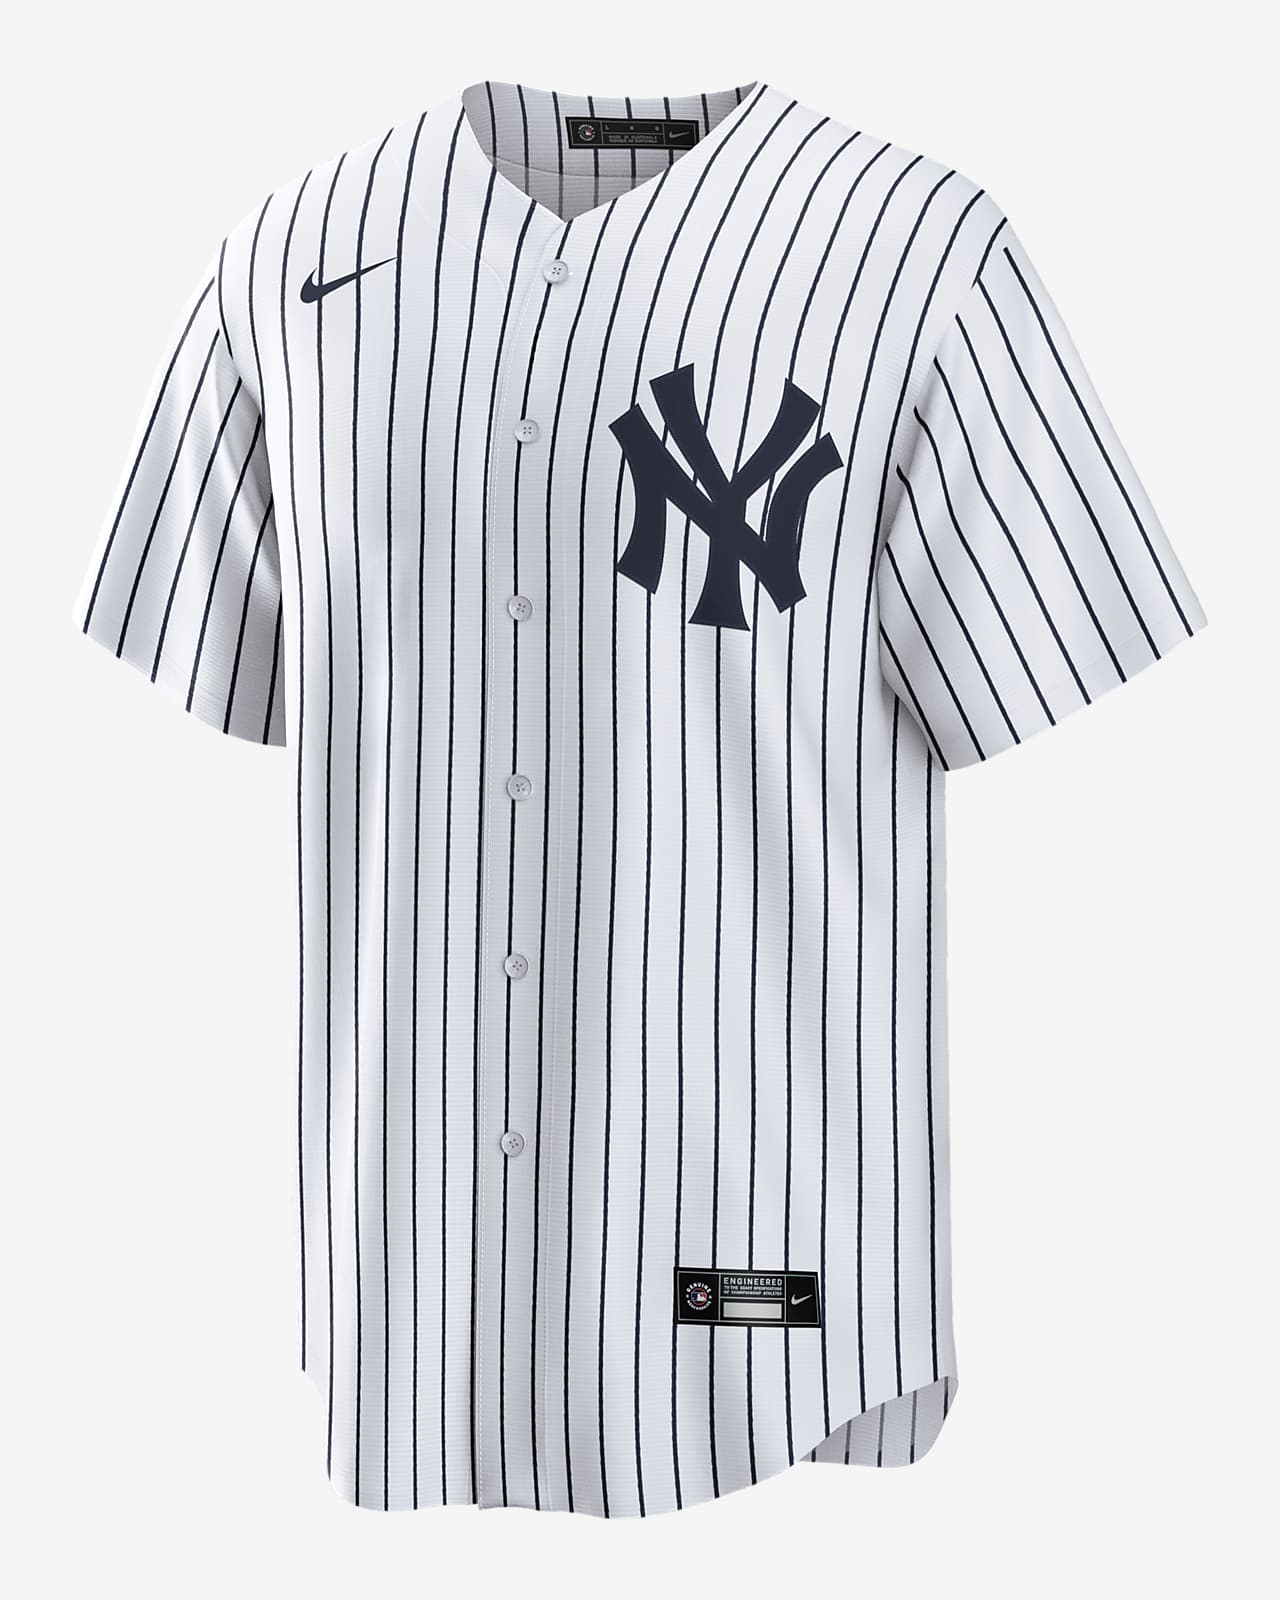 Toddler New York Yankees Aaron Judge Nike White Home Replica Player Jersey